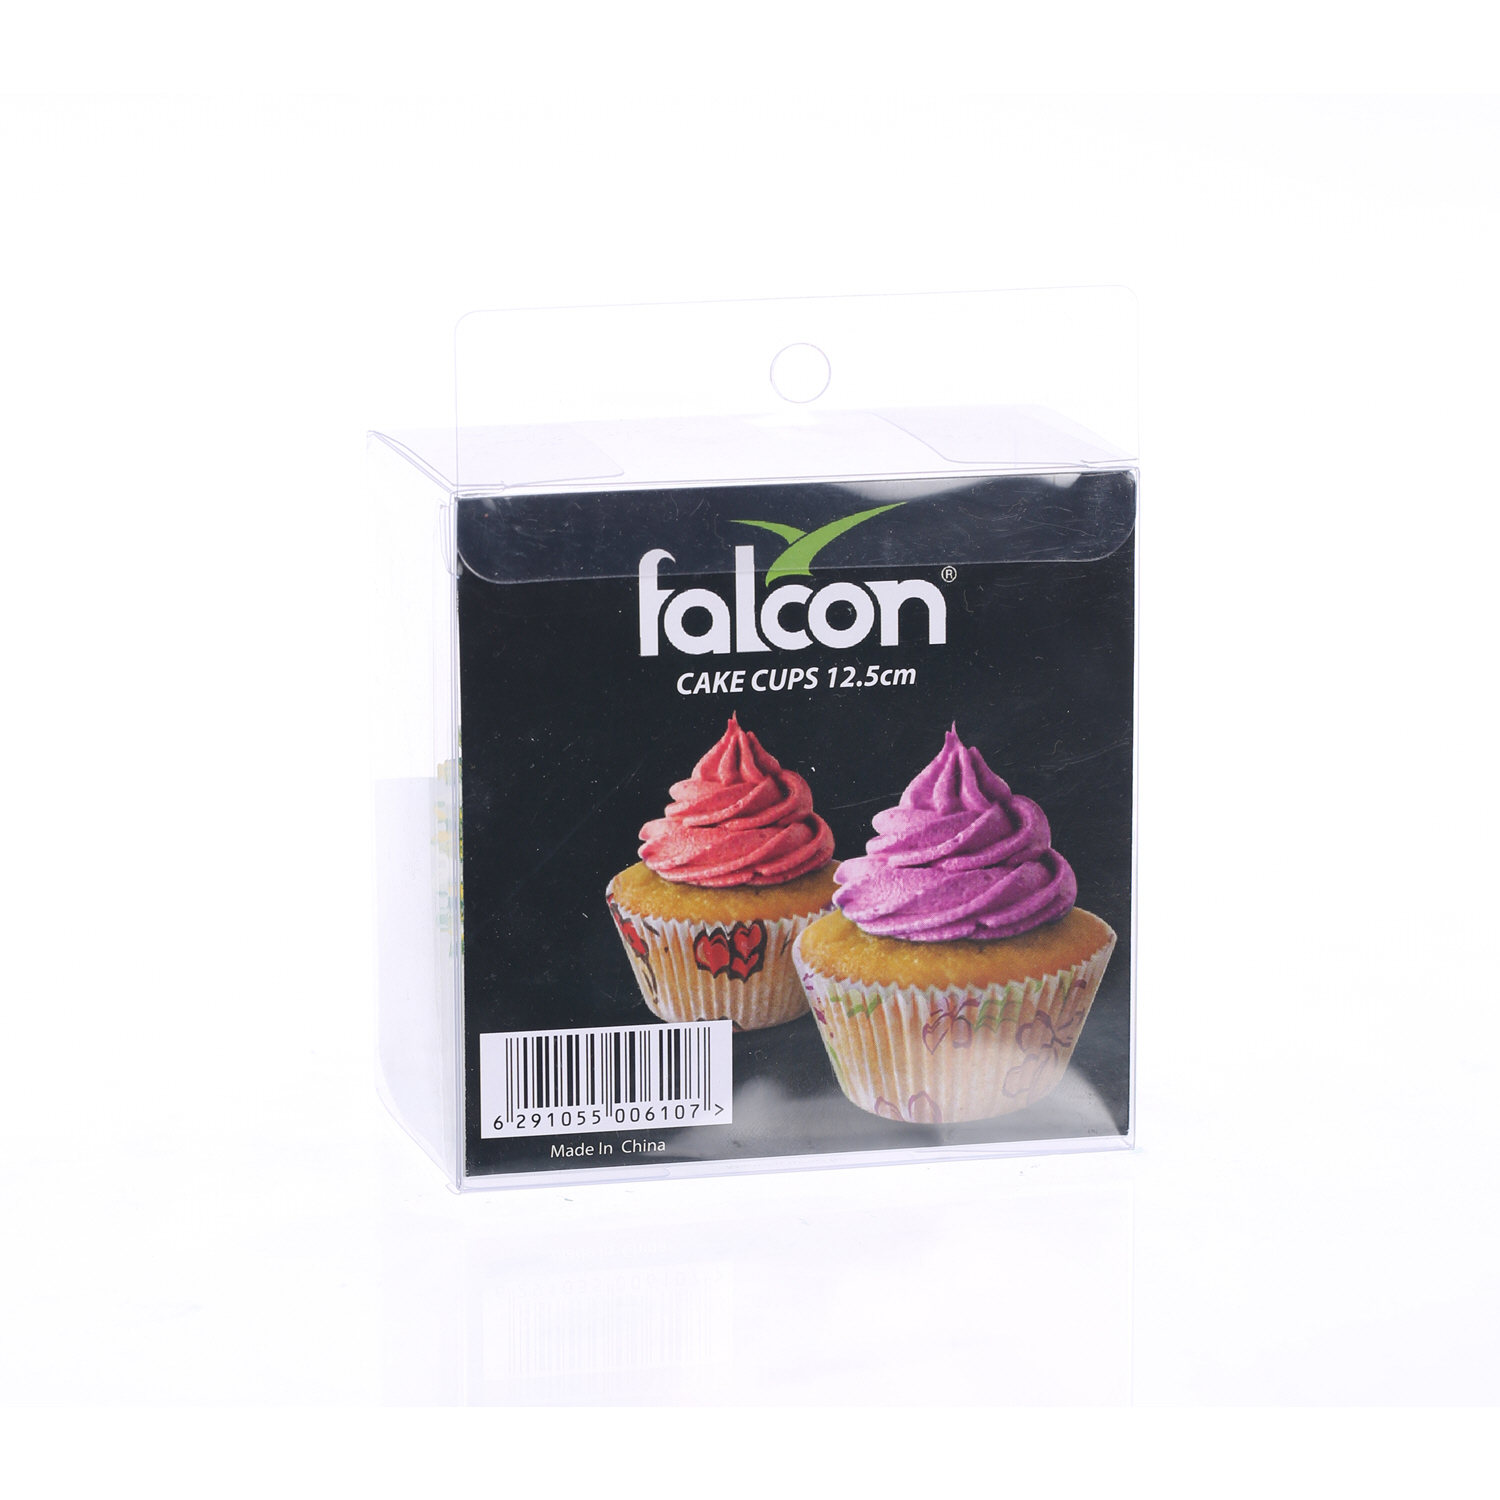 Falcon Retail Cake Cups Design 12.5 cm